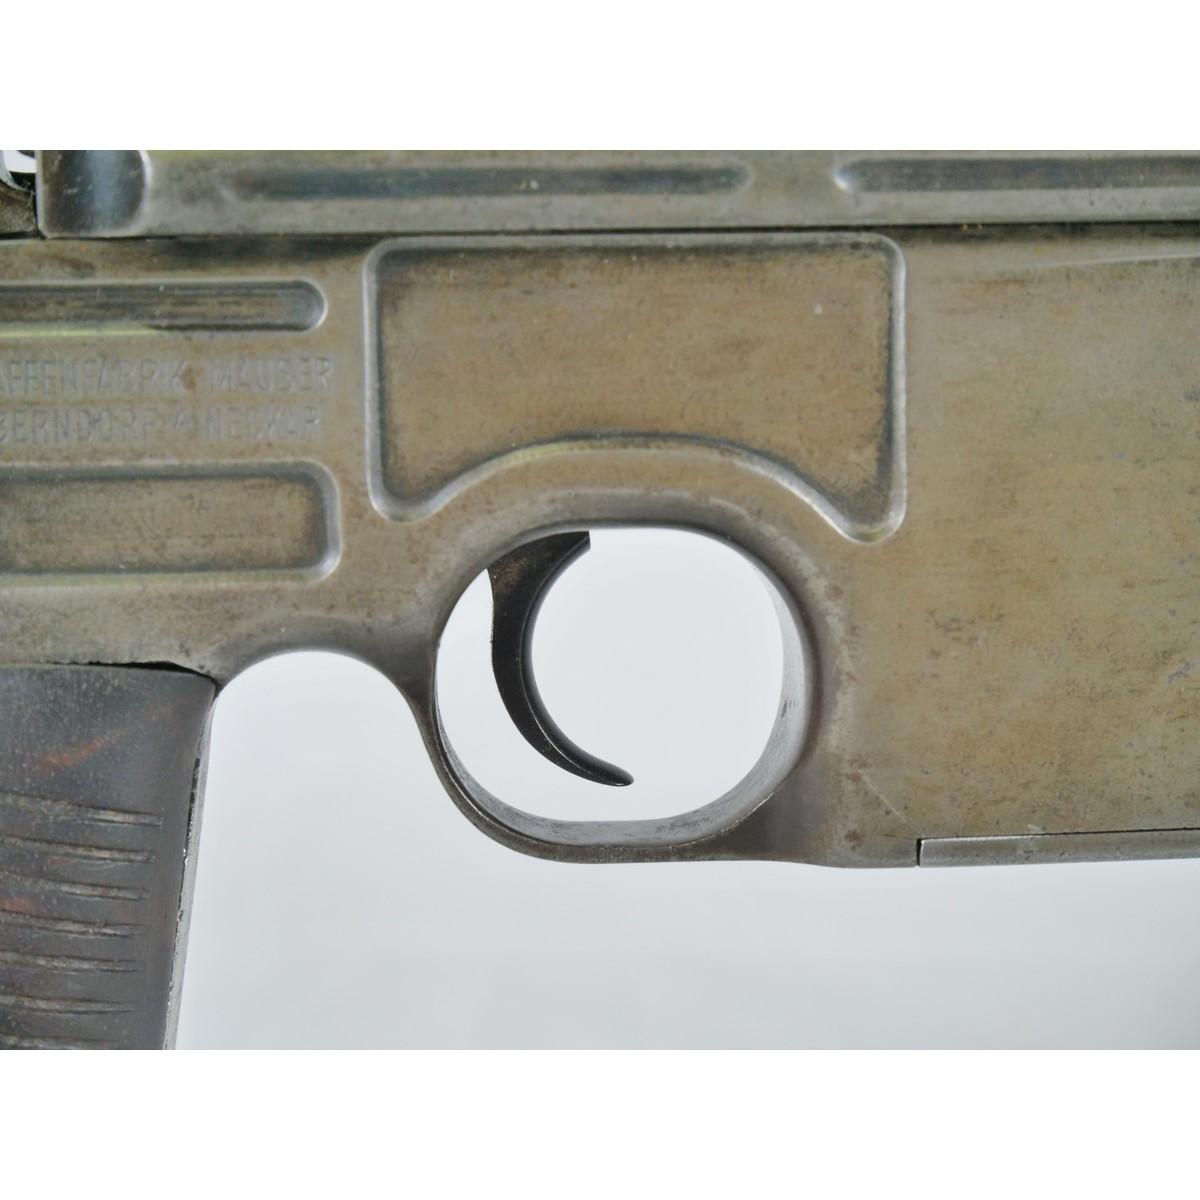 C96 Broomhandle Pistol 7.63 Mauser